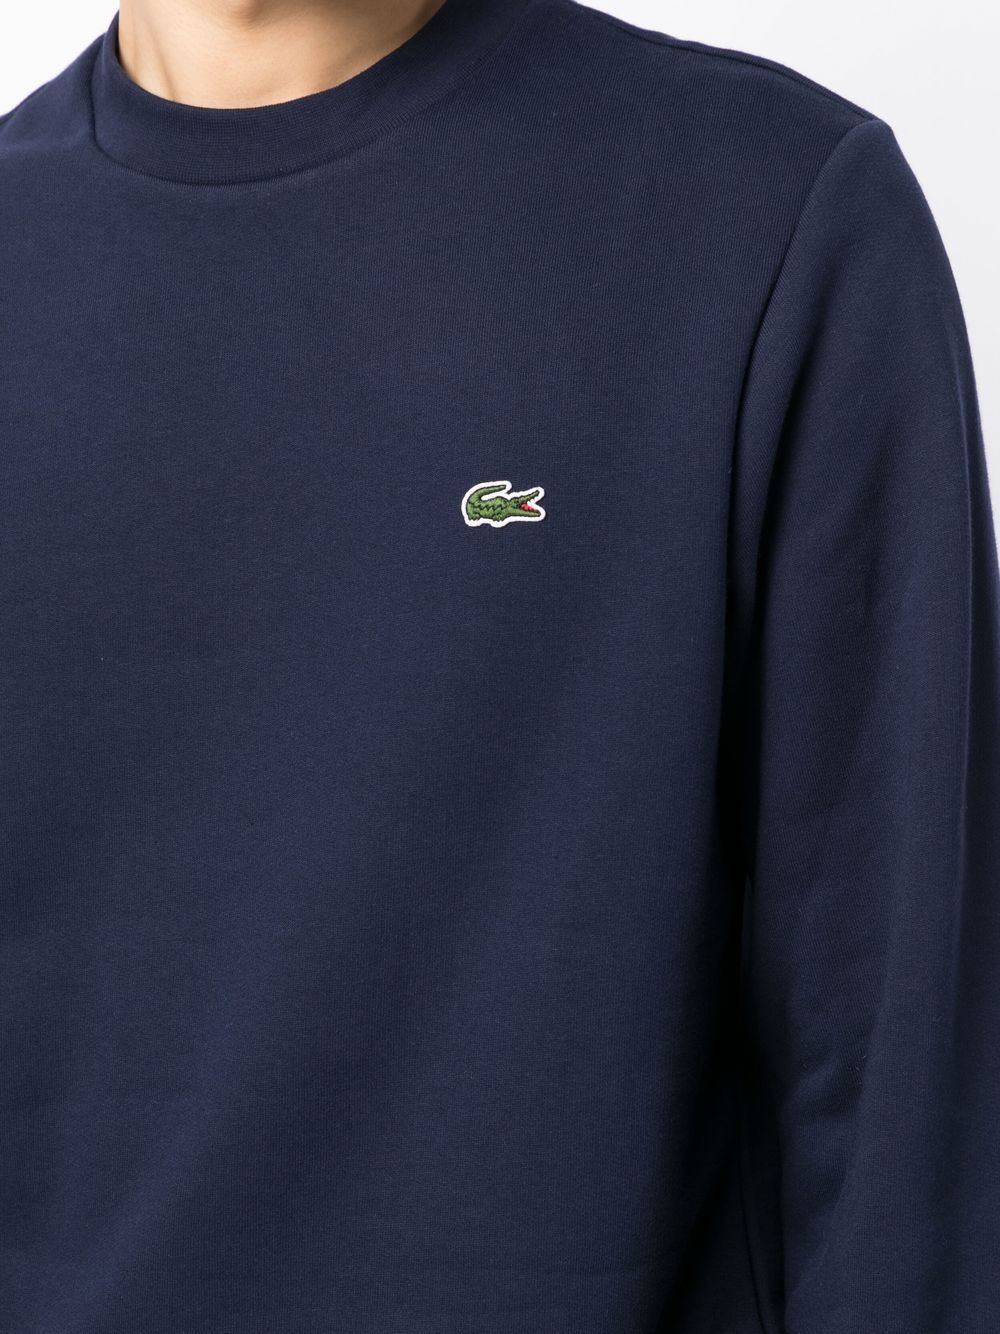 Classic logo-patch cotton sweatshirt<BR/><BR/>